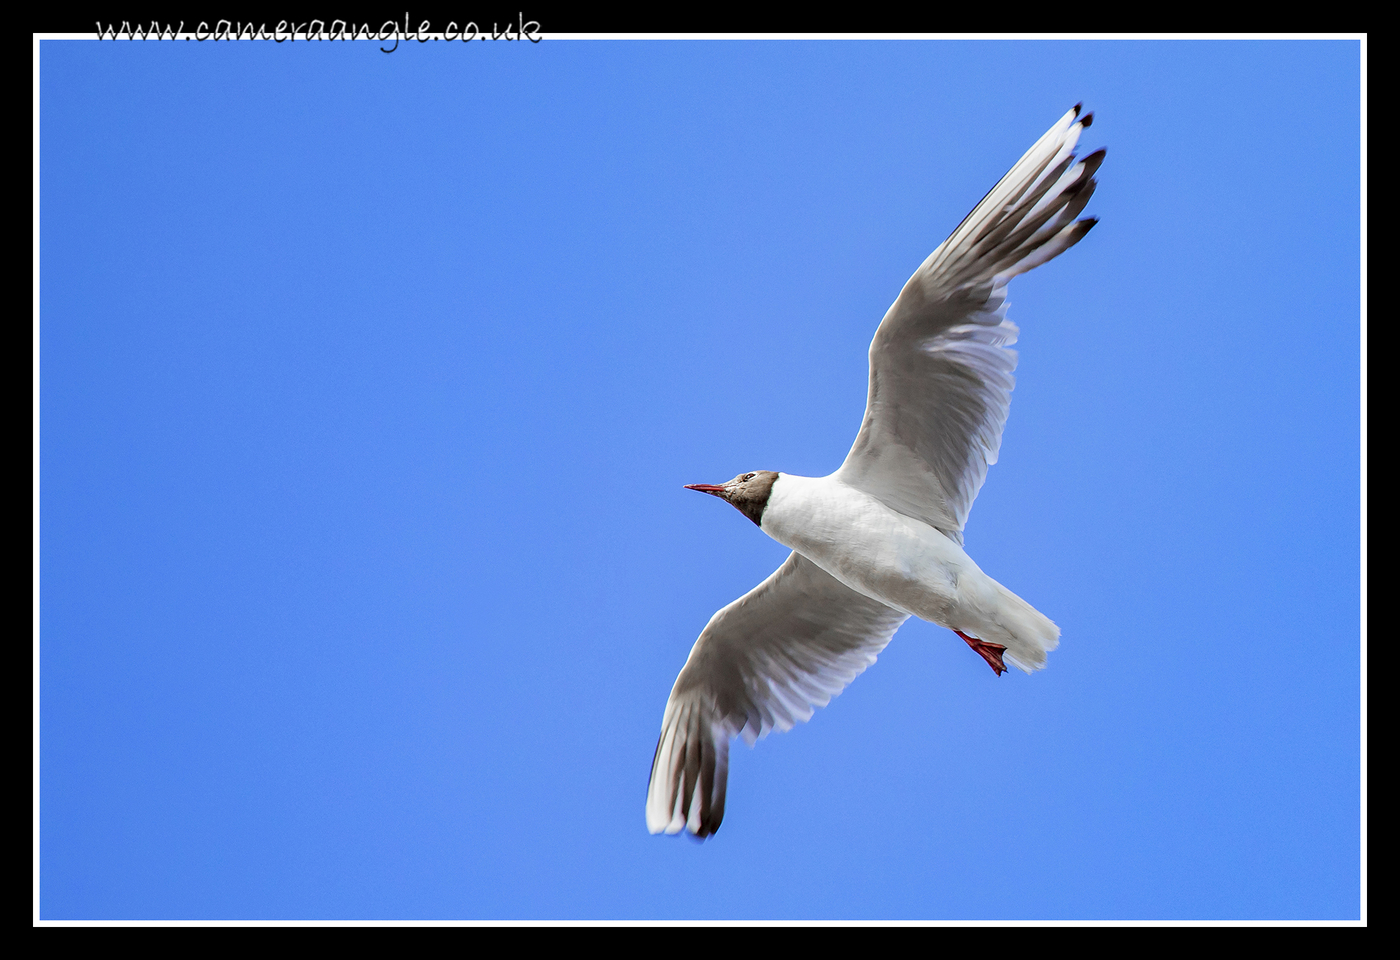 Seagull
Keywords: Seagull Southsea